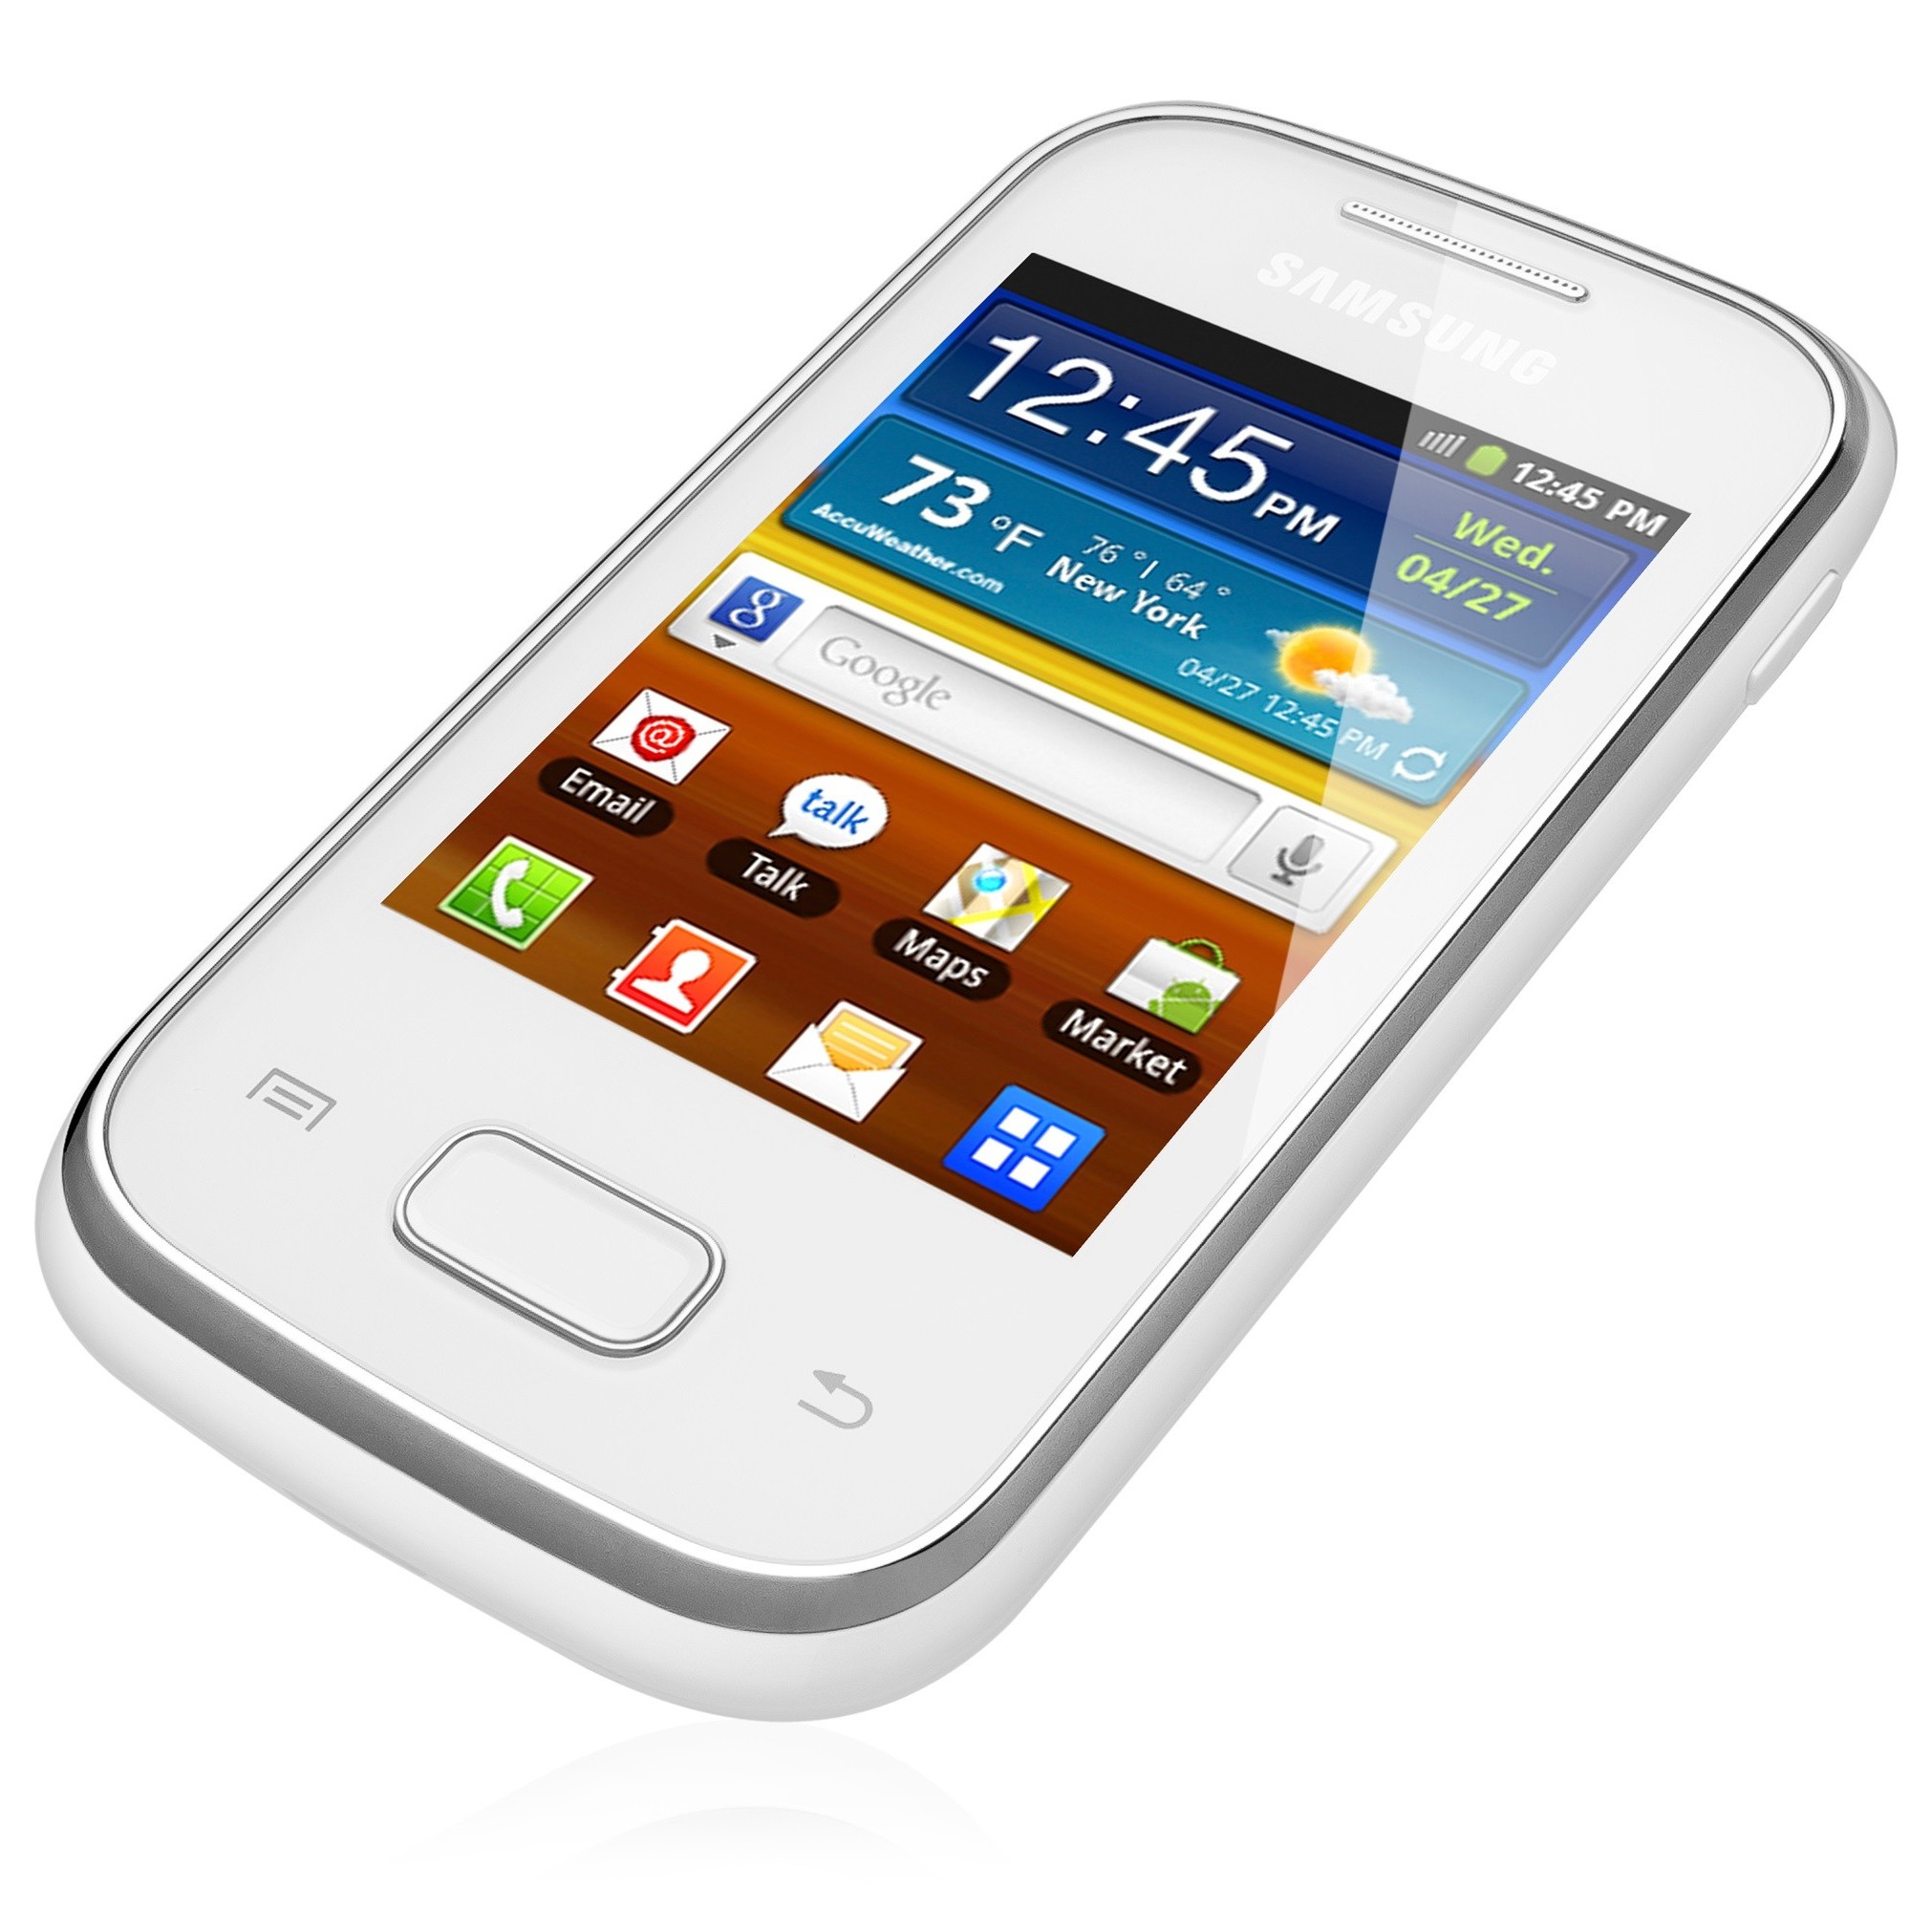 Samsung s5300 Galaxy Pocket. Samsung Galaxy Pocket 2. Самсунг маленький. Самый маленький Samsung. Телефон самсунг сенсорный экран